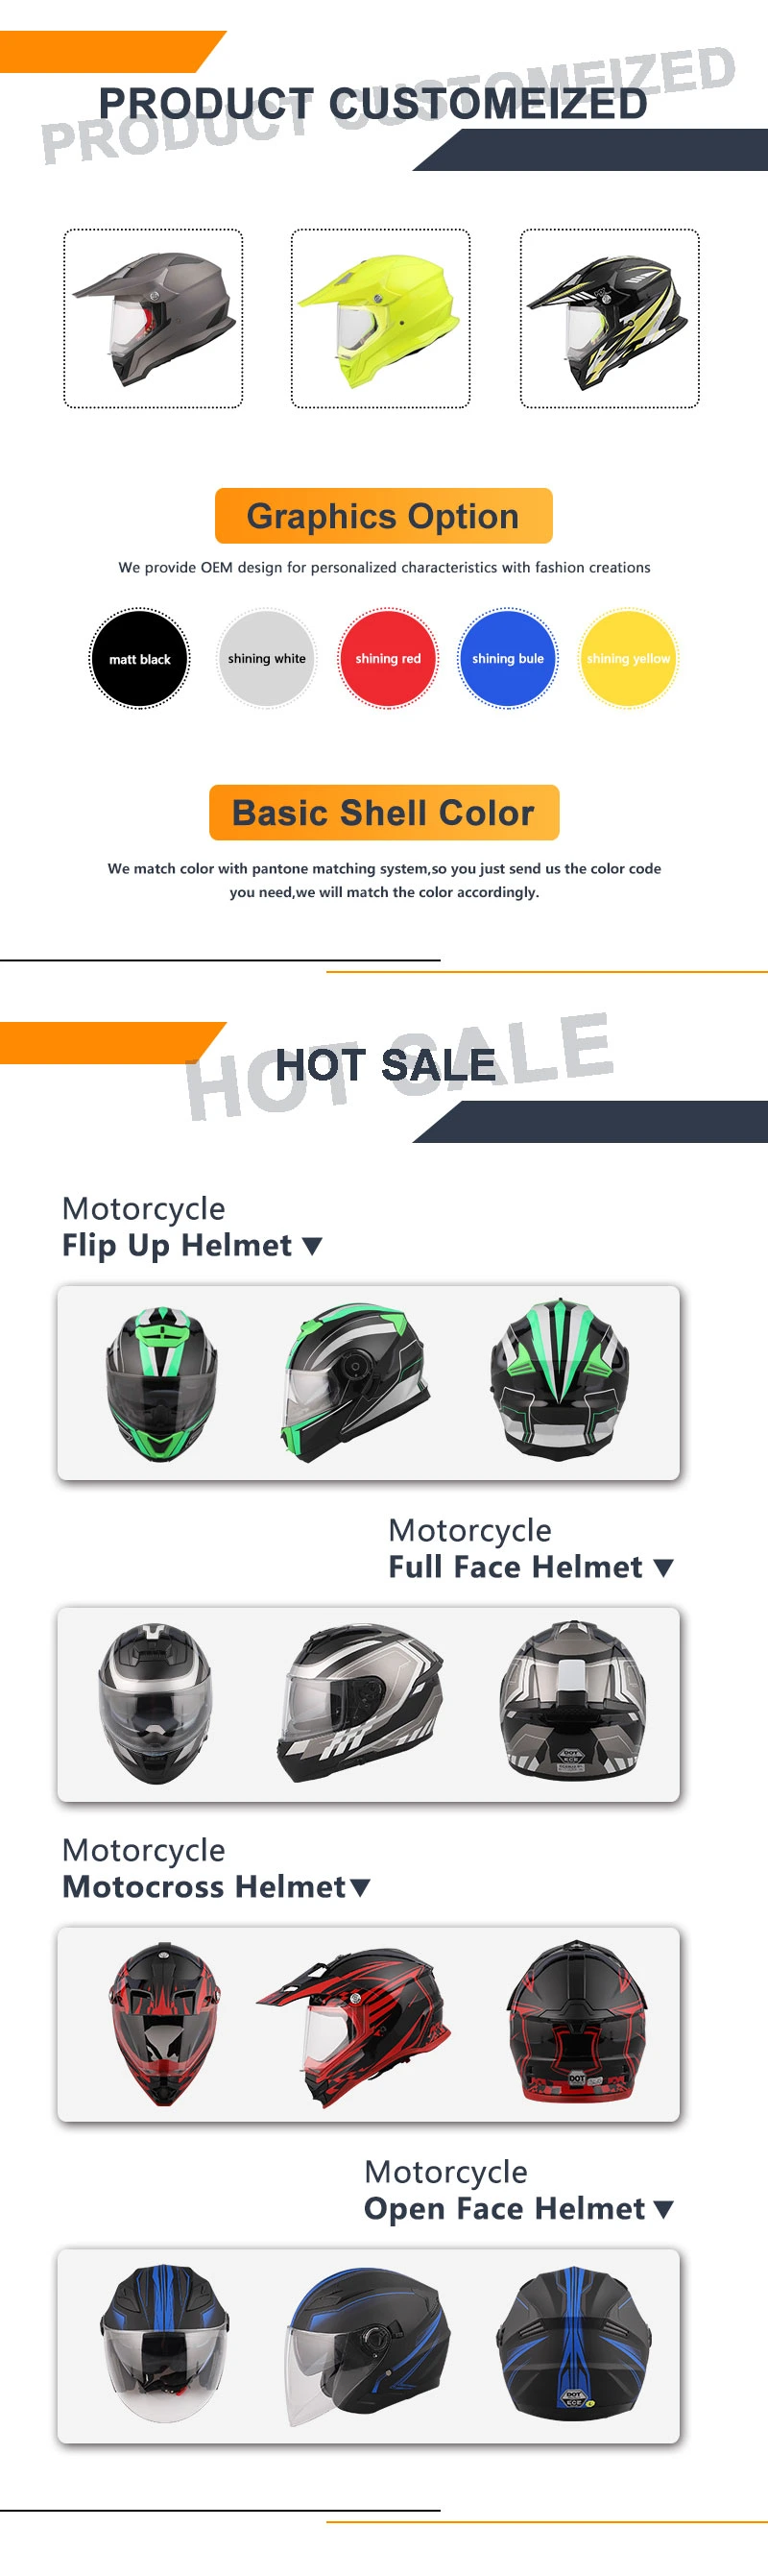 New Full Face Style Helmets for Motorcycle Helmets Mx